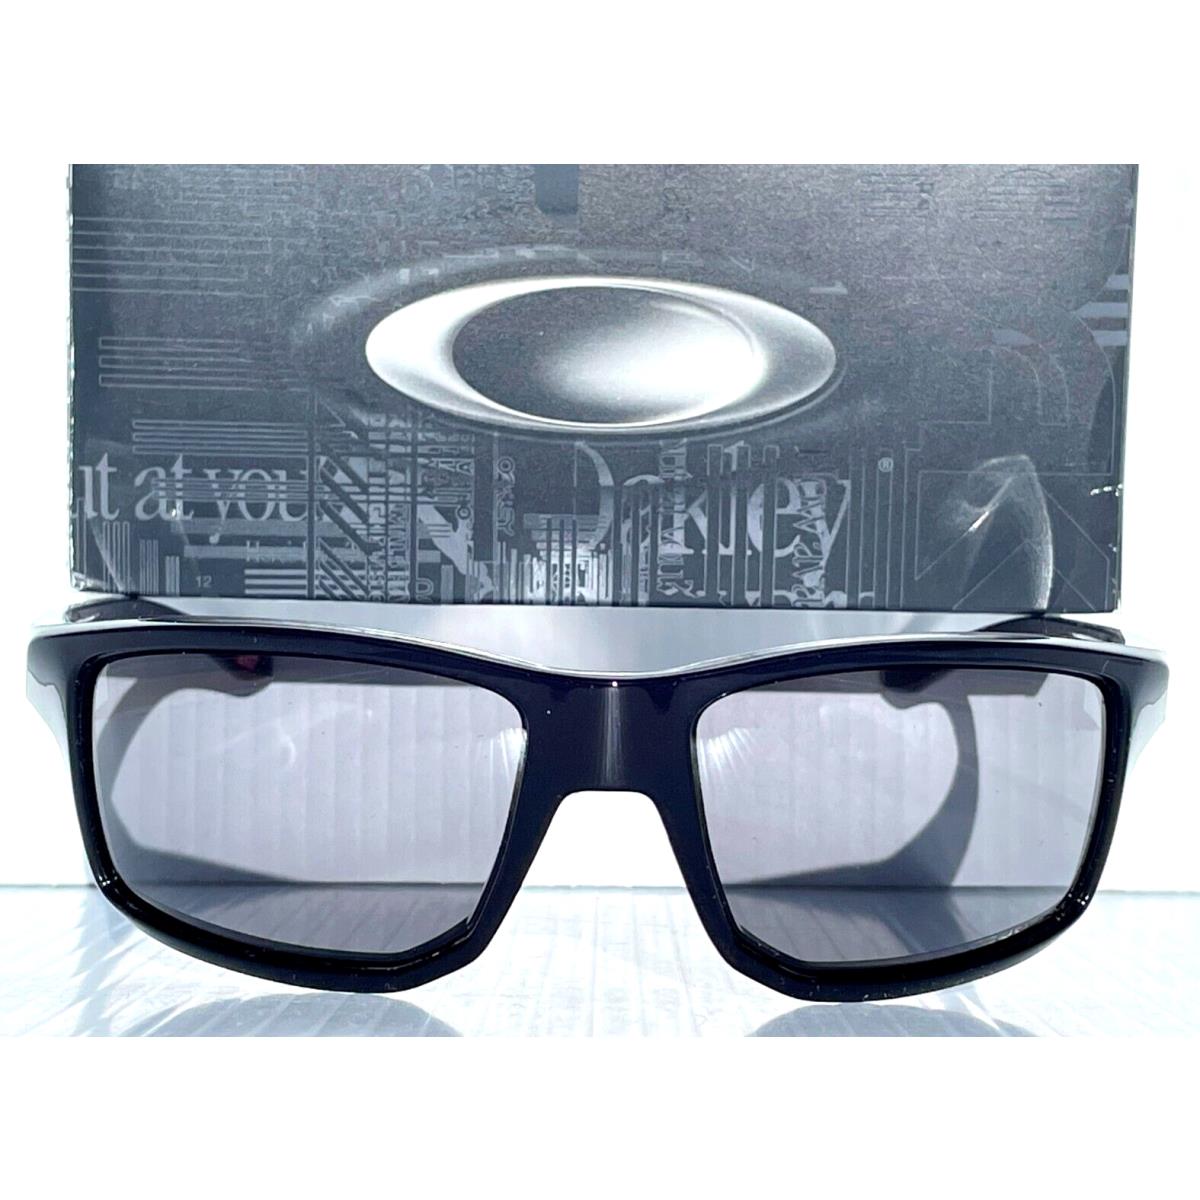 Oakley sunglasses Gibston - Black Frame, Grey Lens